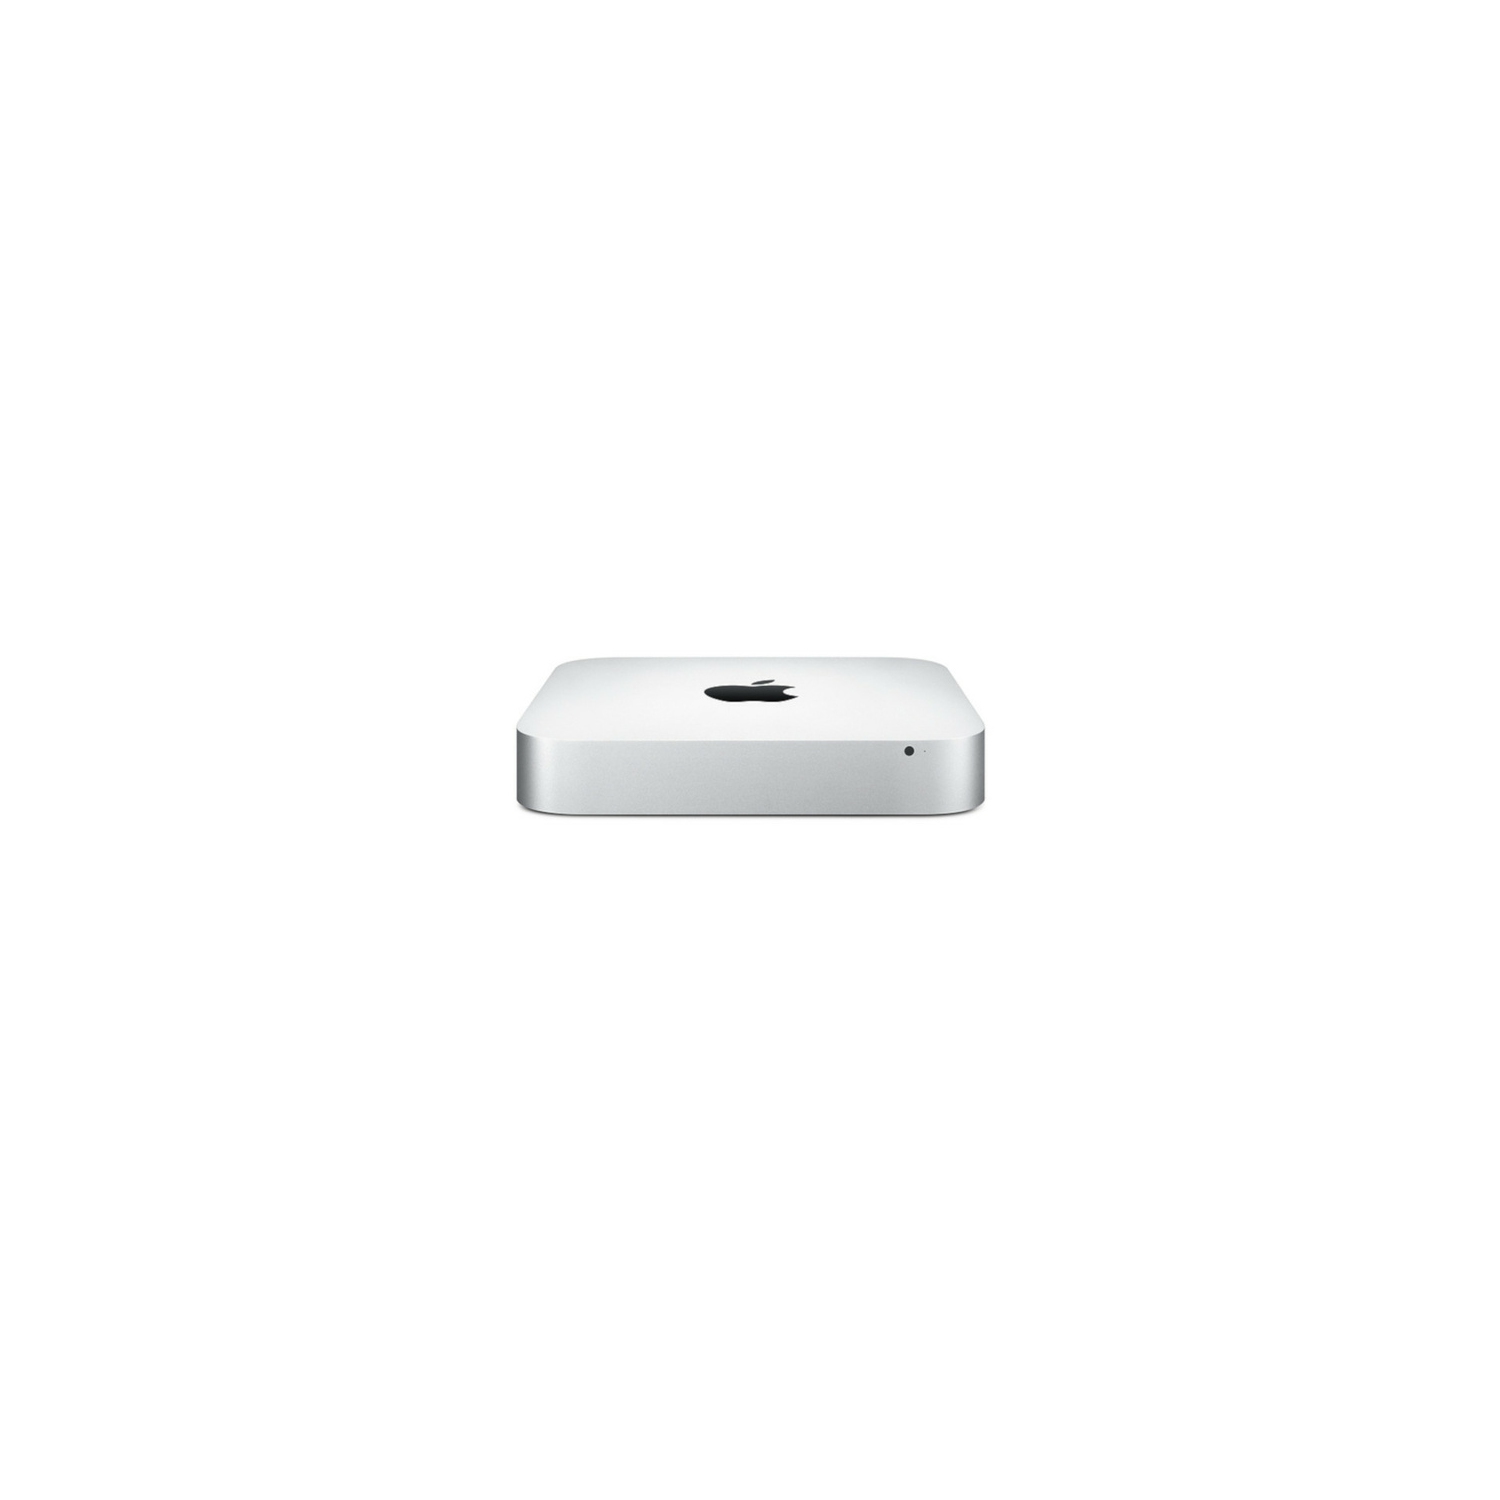 Refurbished (Good) - Apple Mac Mini A1347 Late 2014 (Intel i5-4278U, 8GB Ram, 1TB HD, HDMI, OSX 10.13 High Sierra)